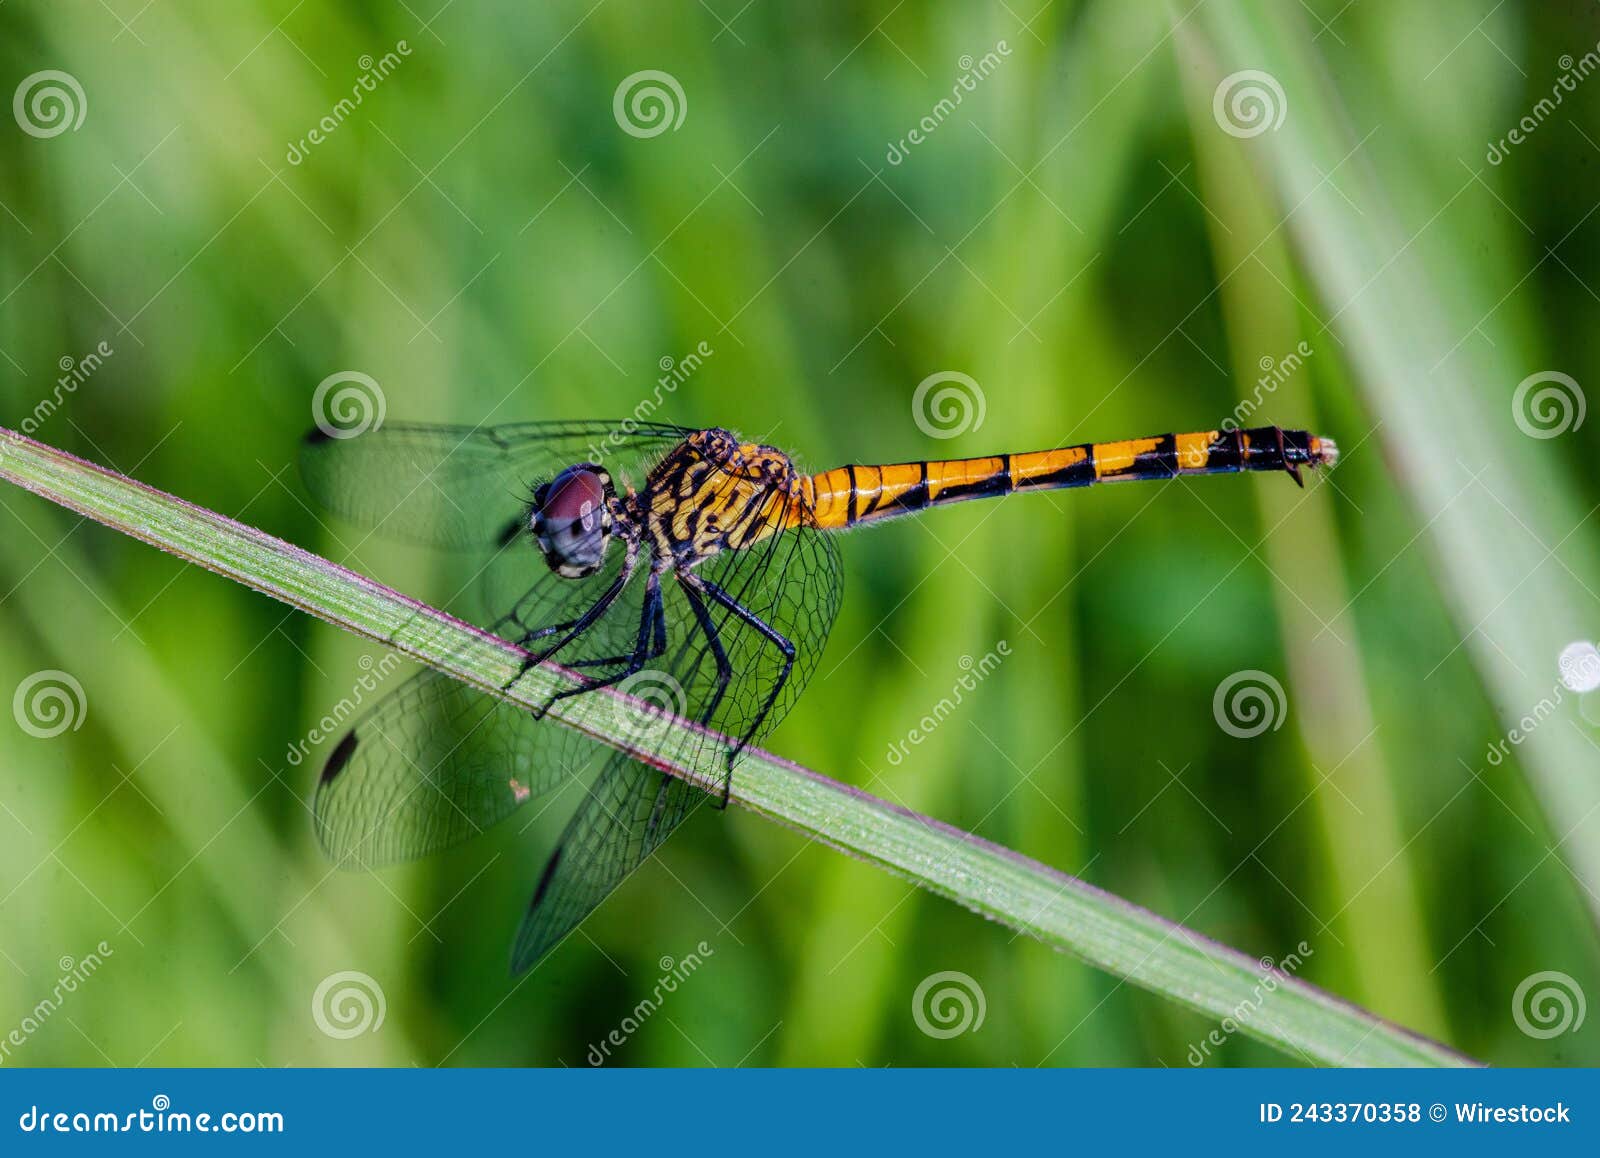 macro shot of libelula (dragonfly) approaching a plant